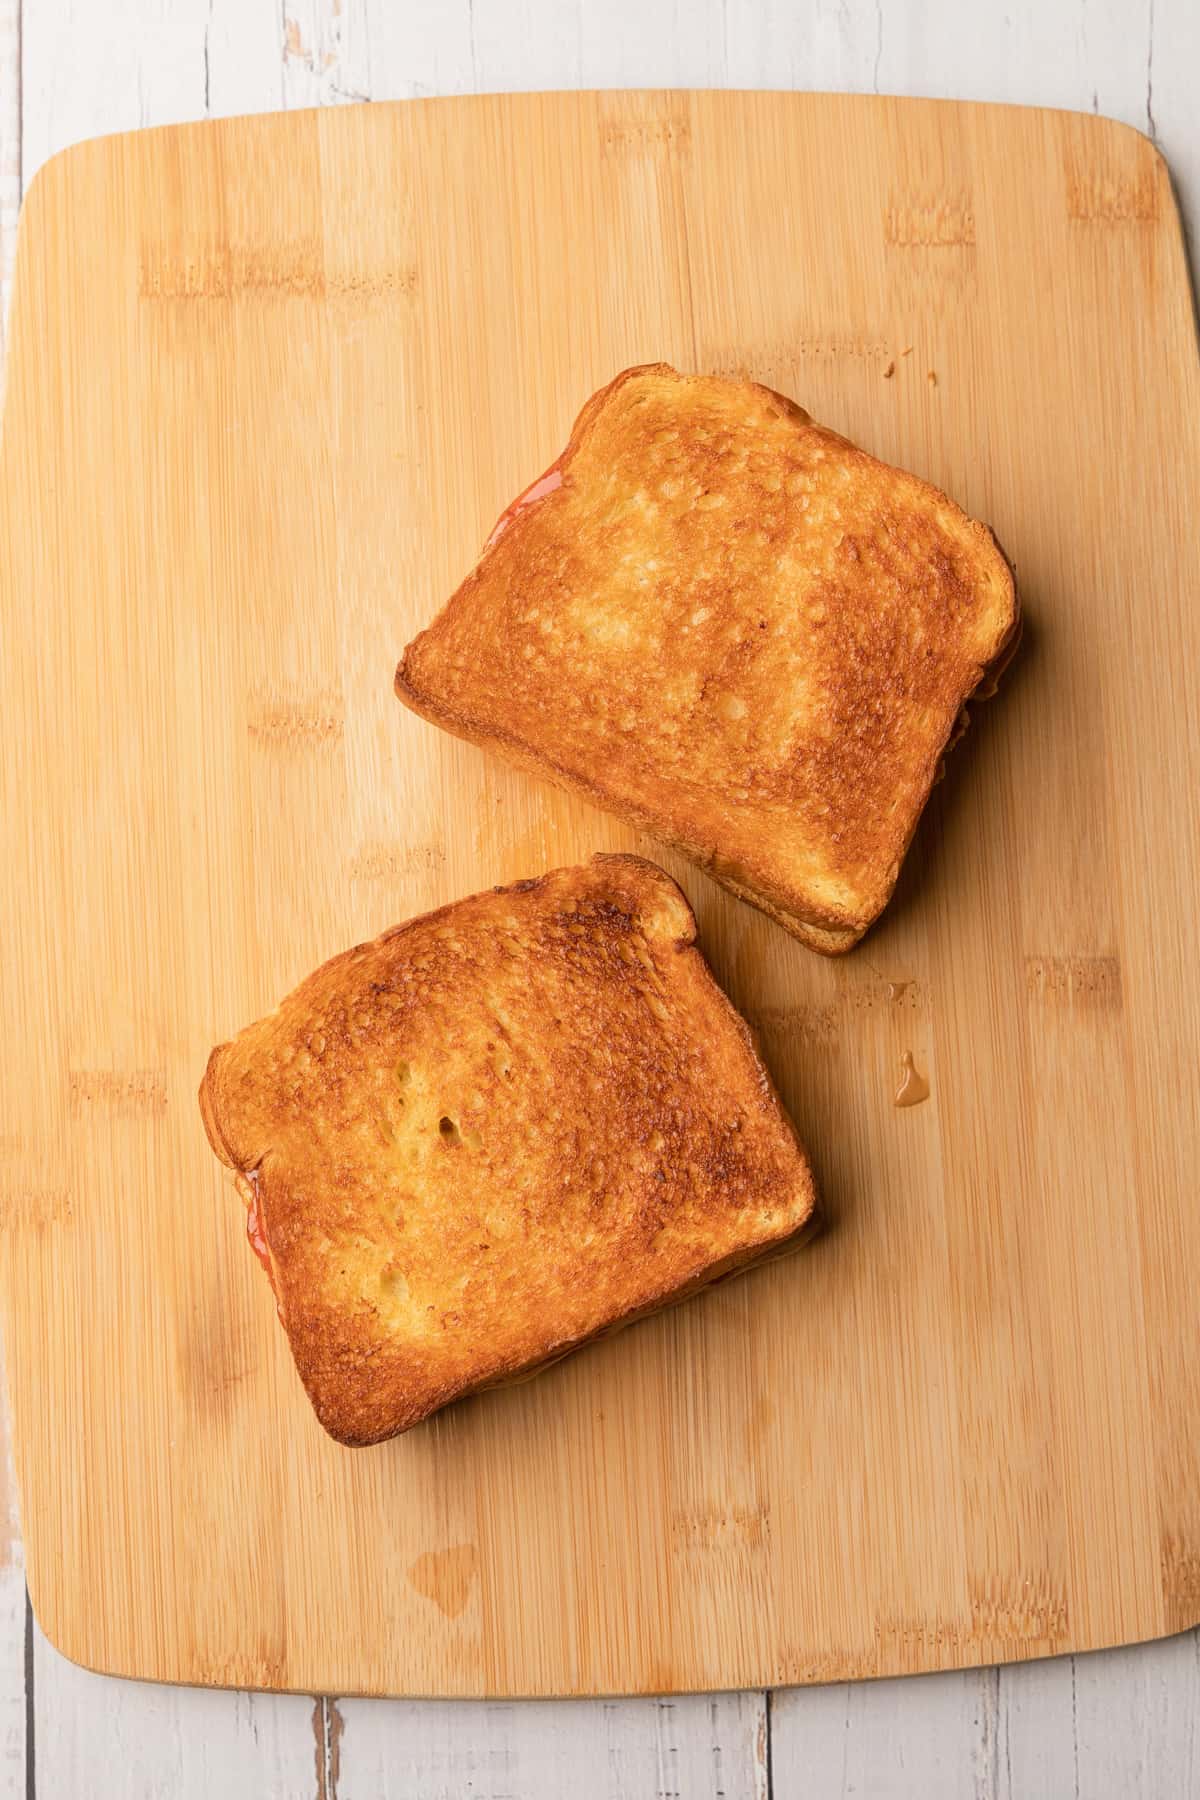 Two air fried pbj sandwiches on a cutting board.